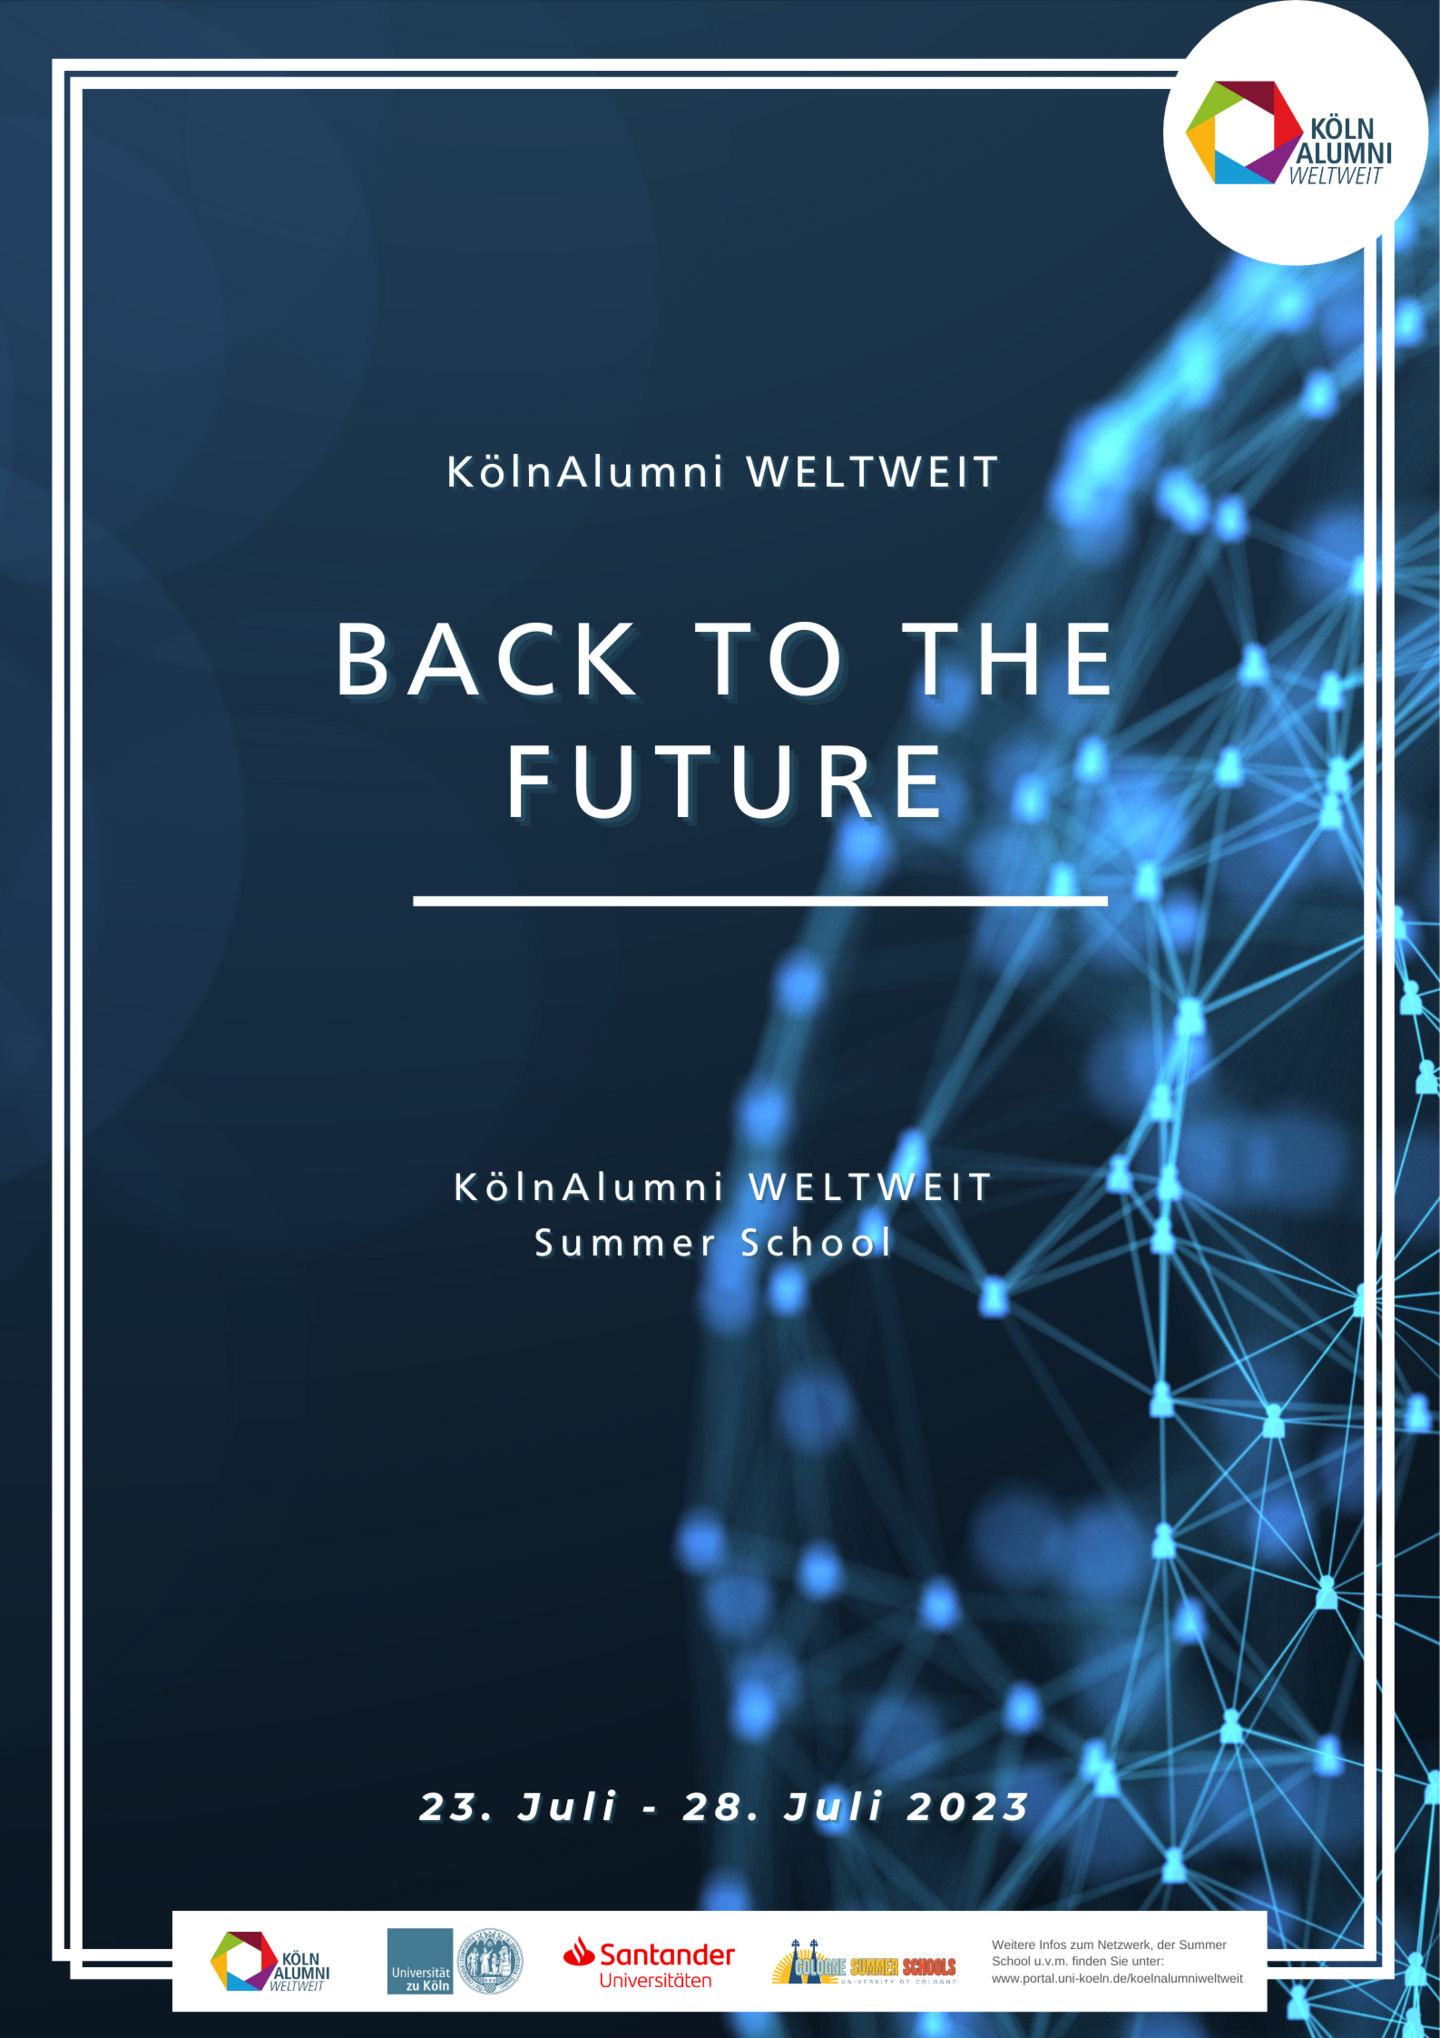 Poster KölnAlumni WELTWEIT Summer School 2023 "Back to the Future"